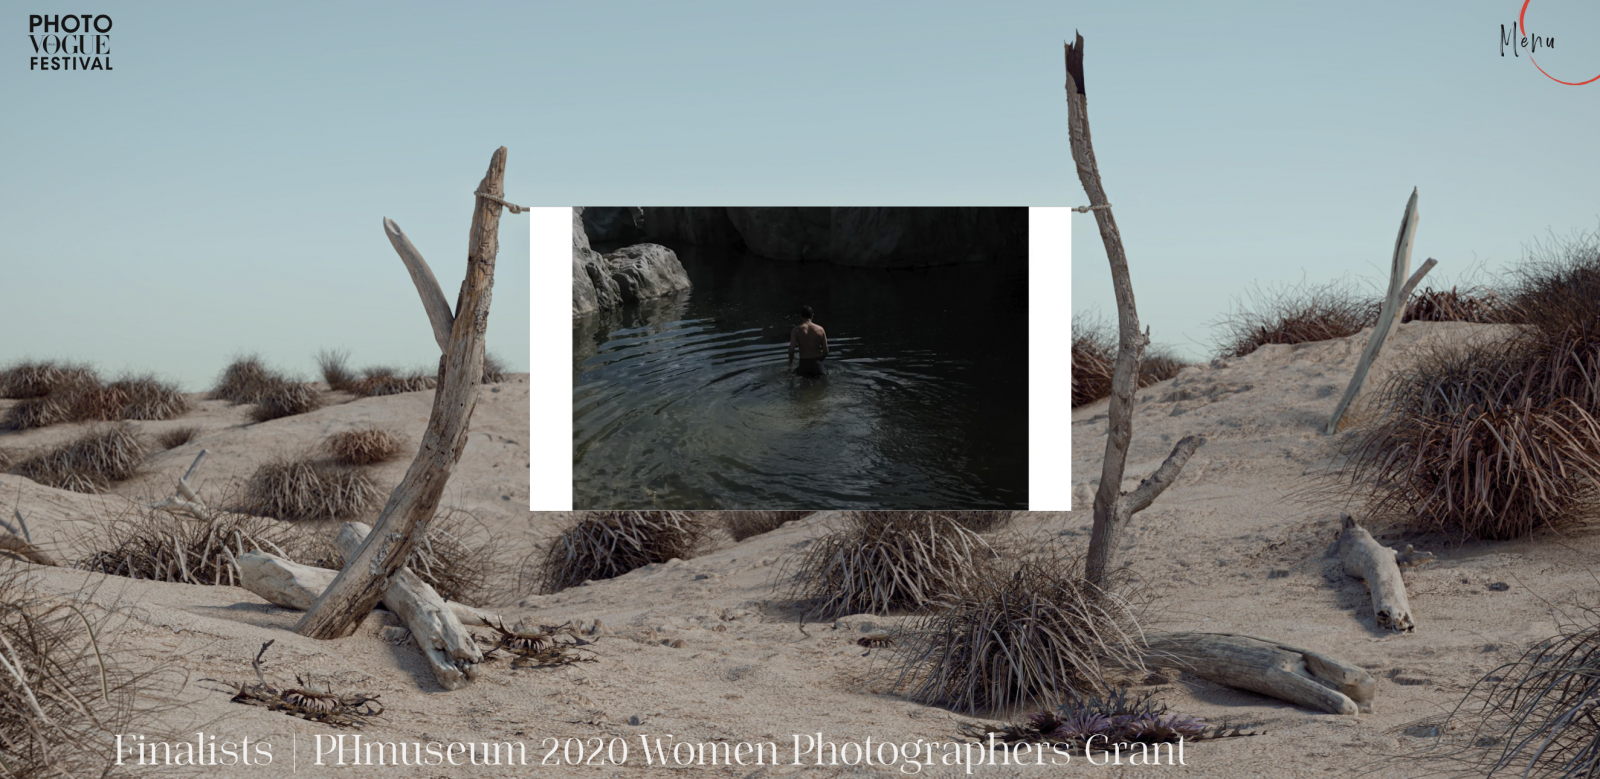 Thumbnail of PH Museum Women Photographers Grant Finalists on Photo Vogue Festival!